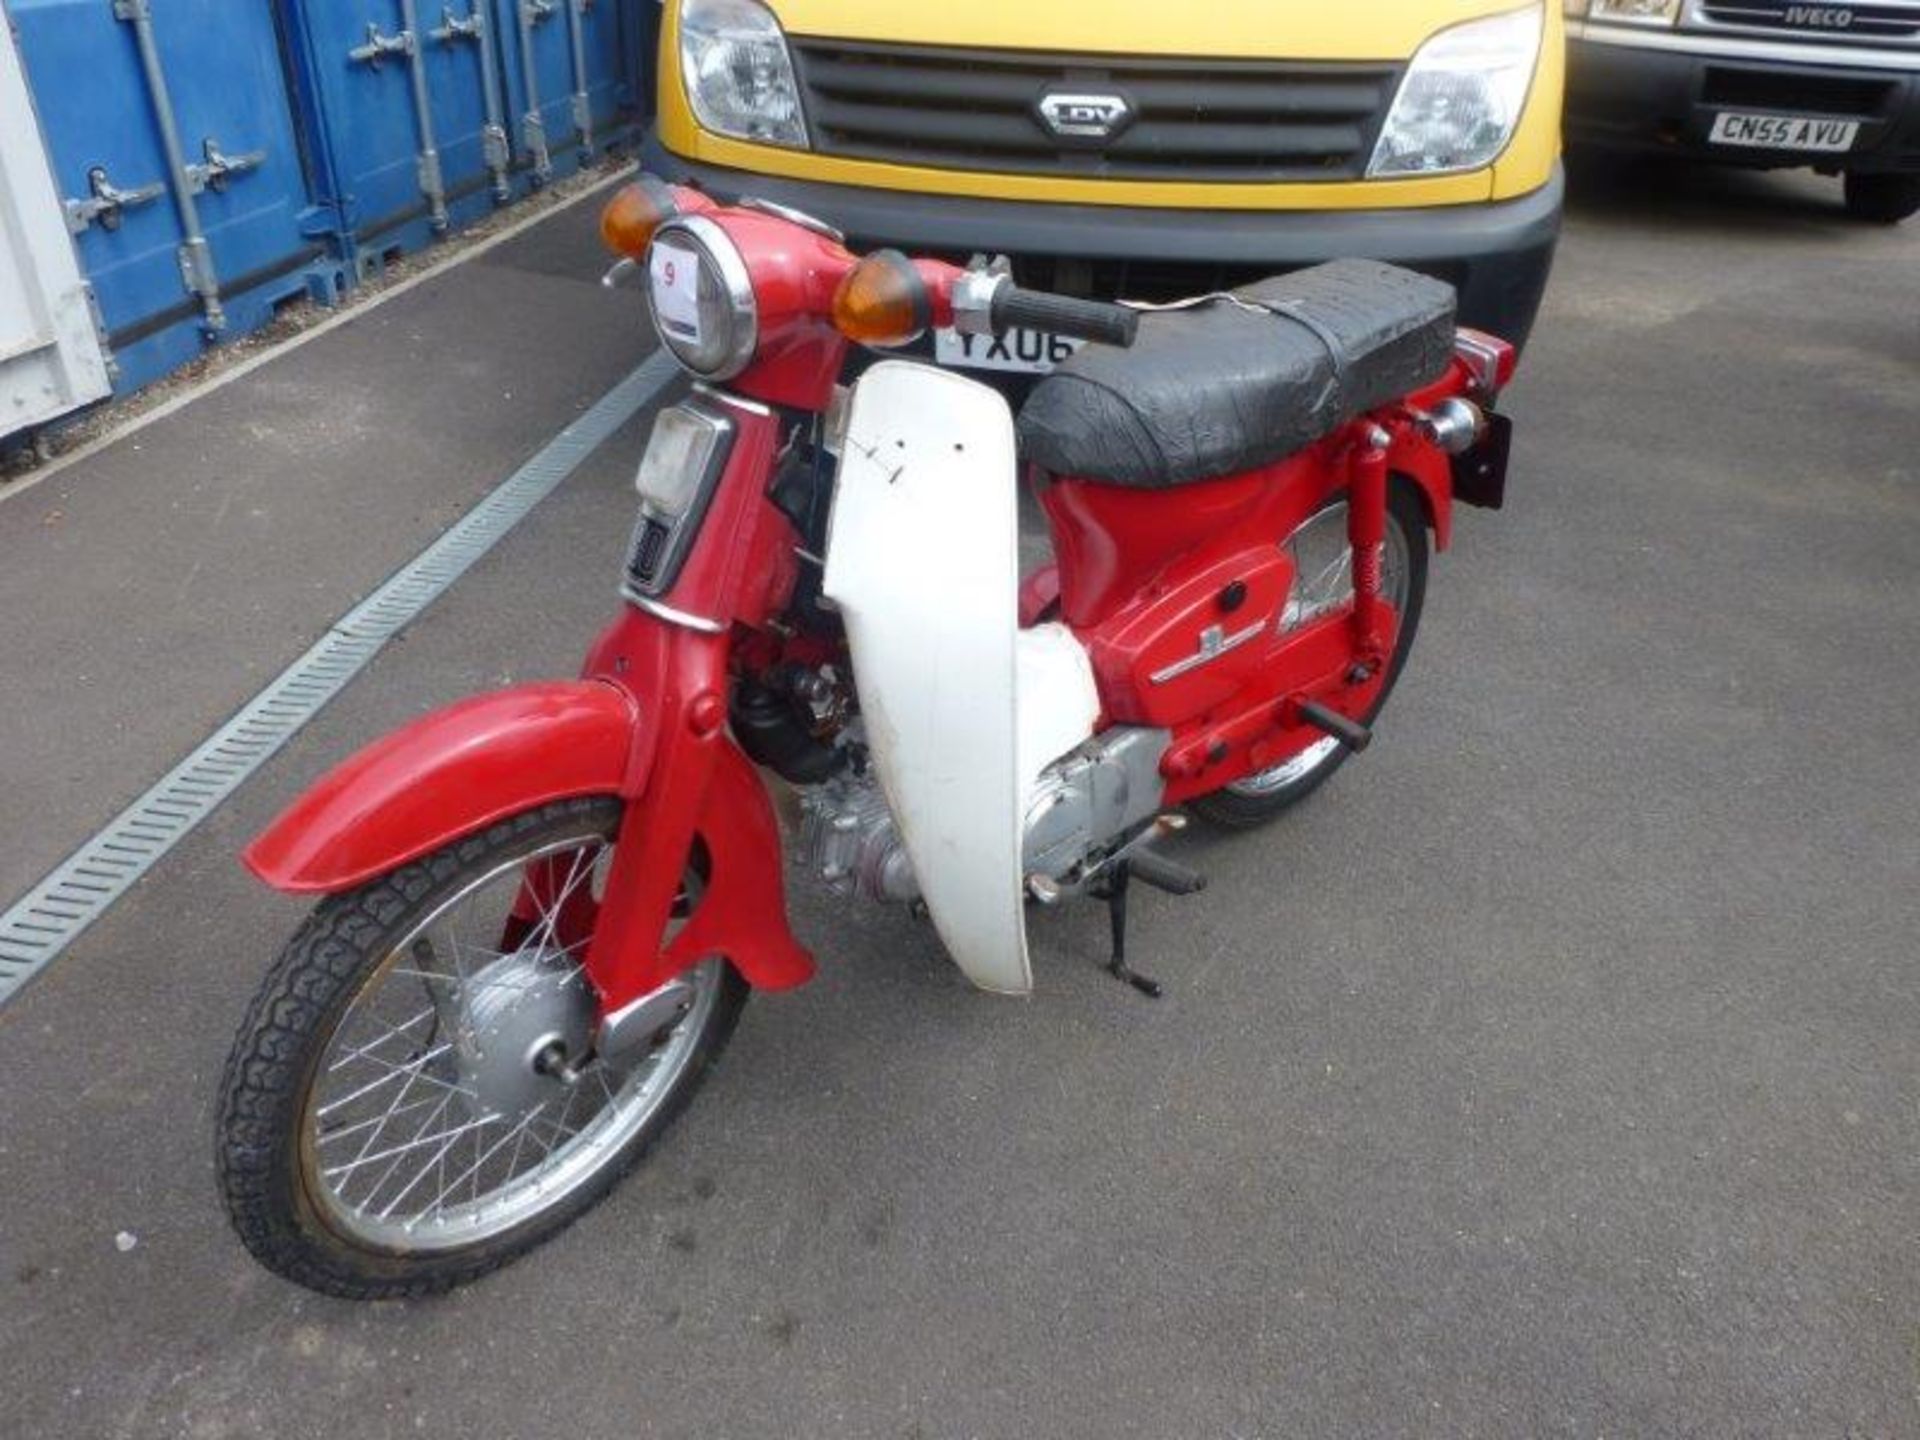 Honda C90 Step Through motorcycle, 90cc (Red)  Registration no. RGP 55V  VIN no. C905160187  Date of